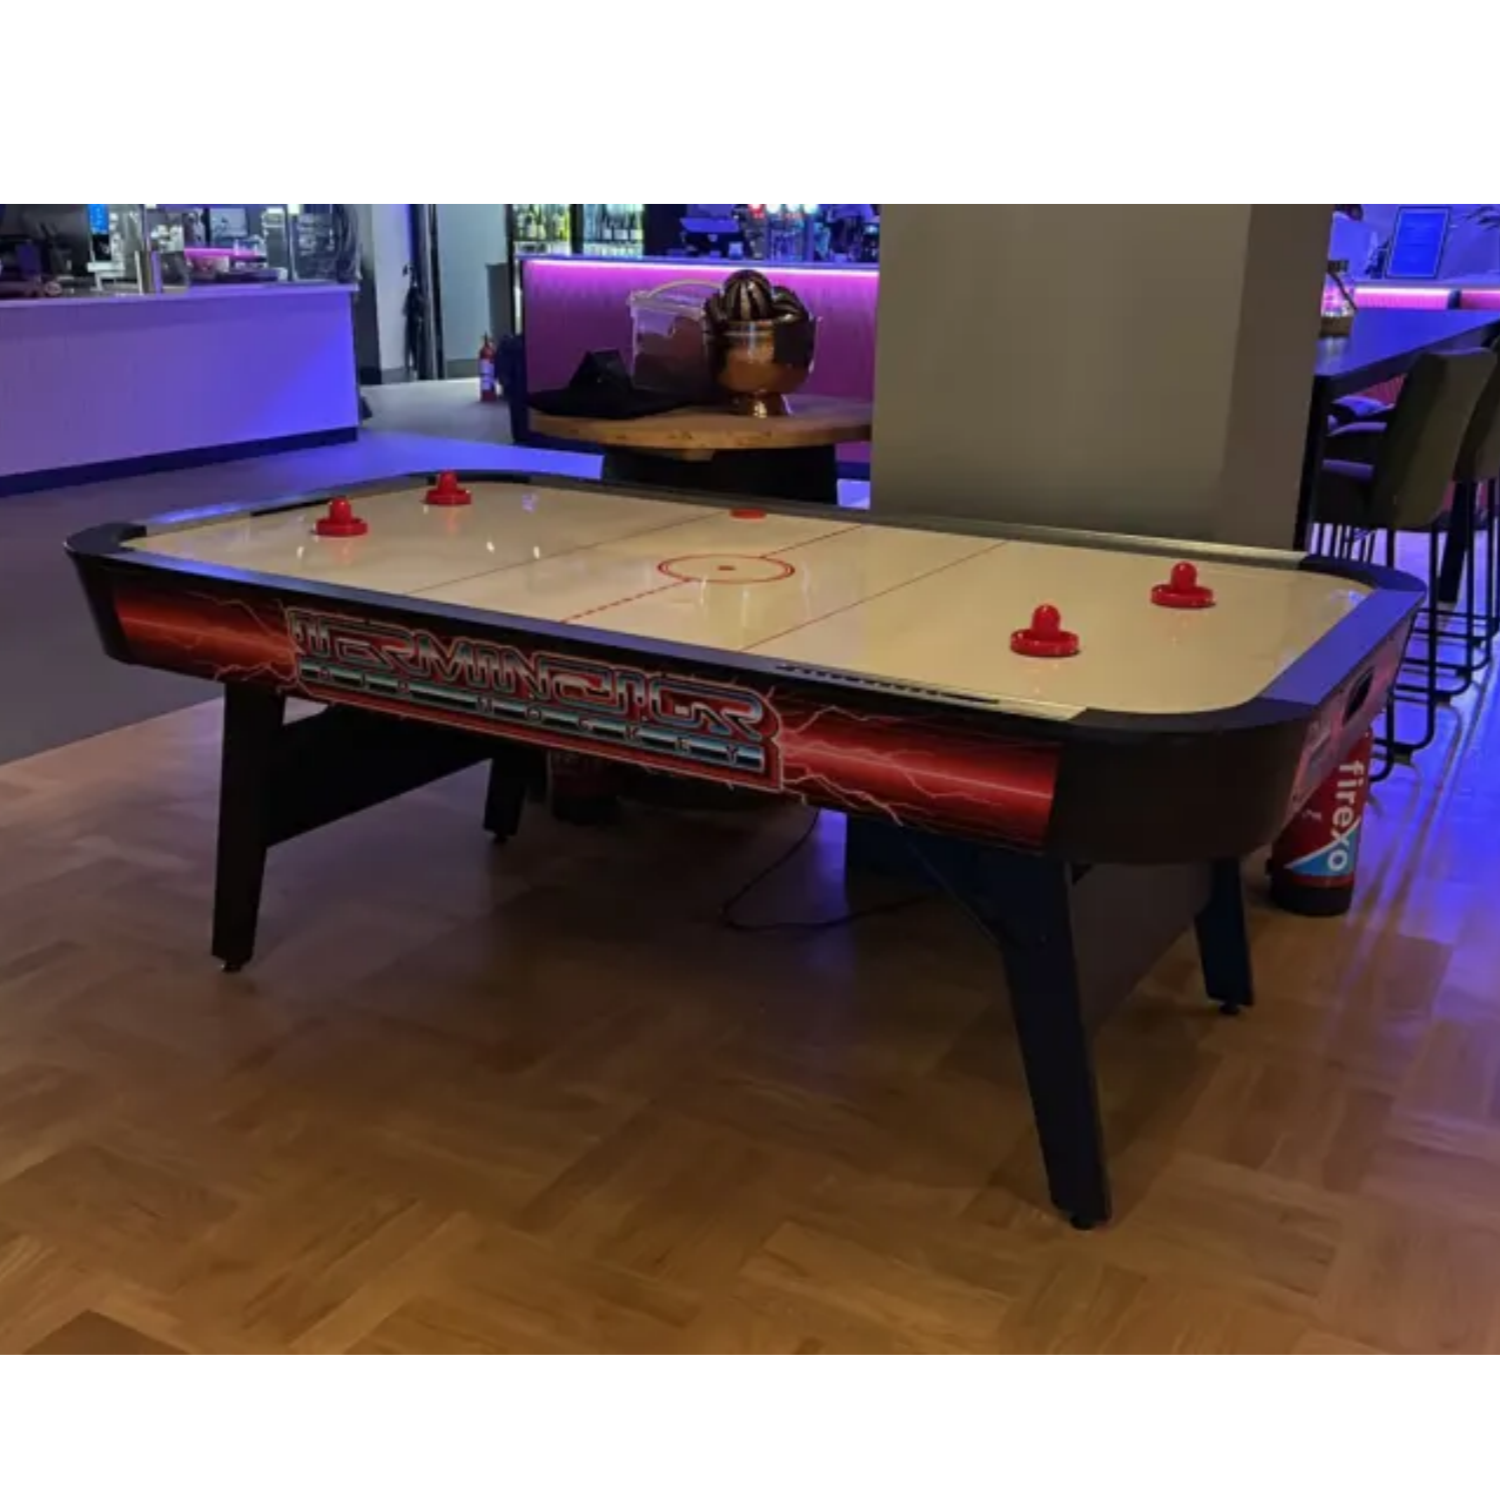 UX7010 7FT Air Hockey Table